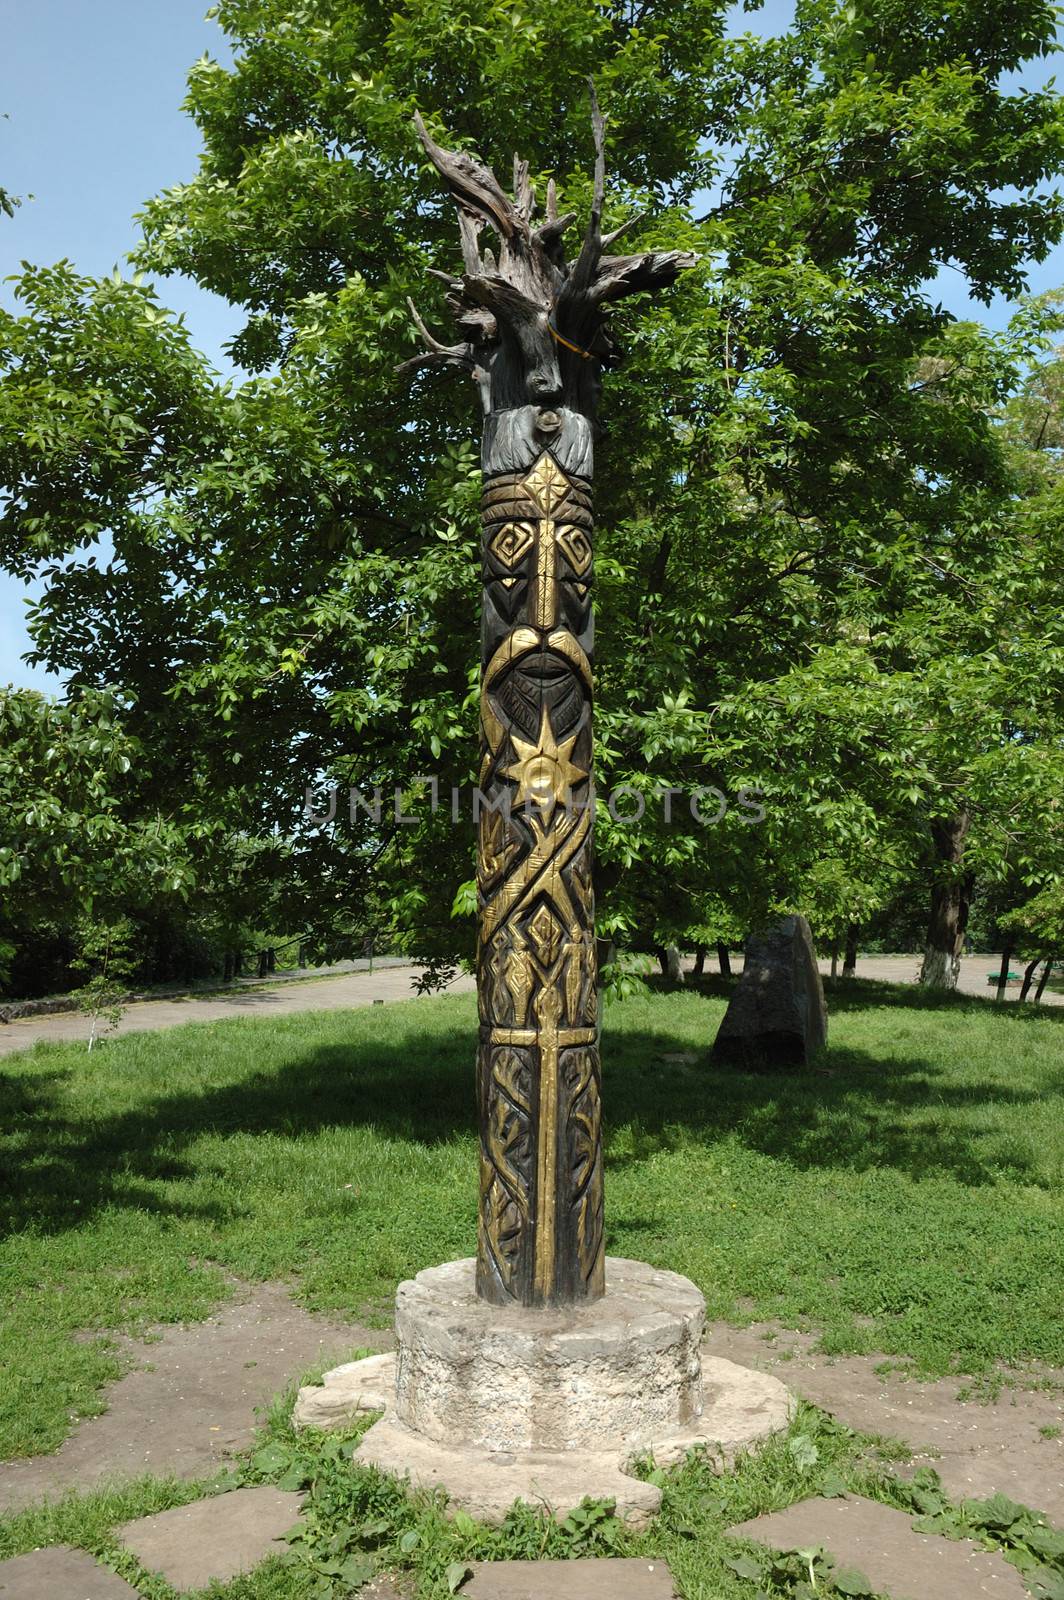 Wooden pagan's idol of Perun  - god of Thunder in Slavic mythology


